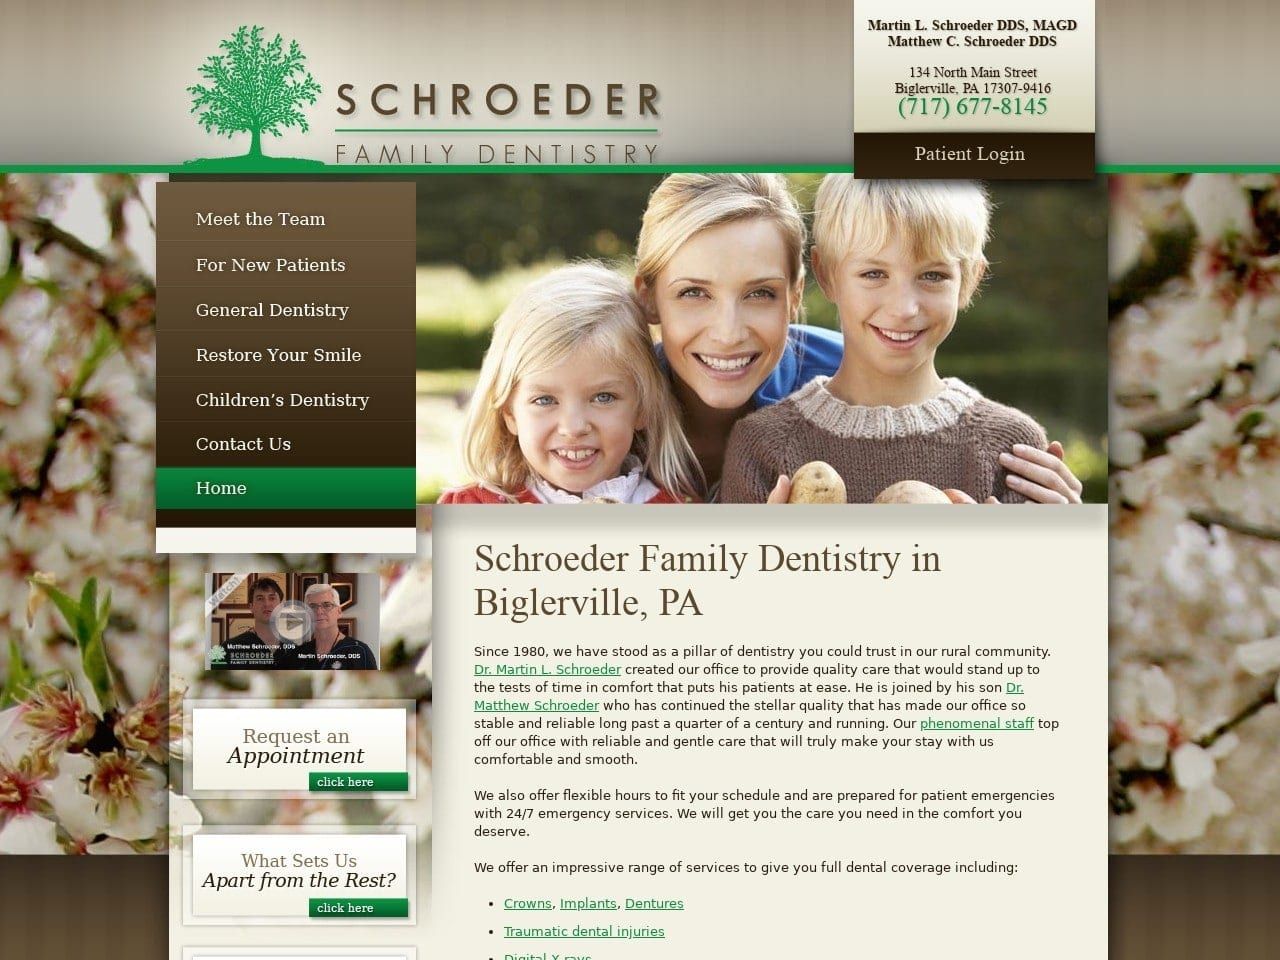 Martin L. Schroeder Dds Magd Schroeder Family Dent Website Screenshot from schroederfamilydentistry.com